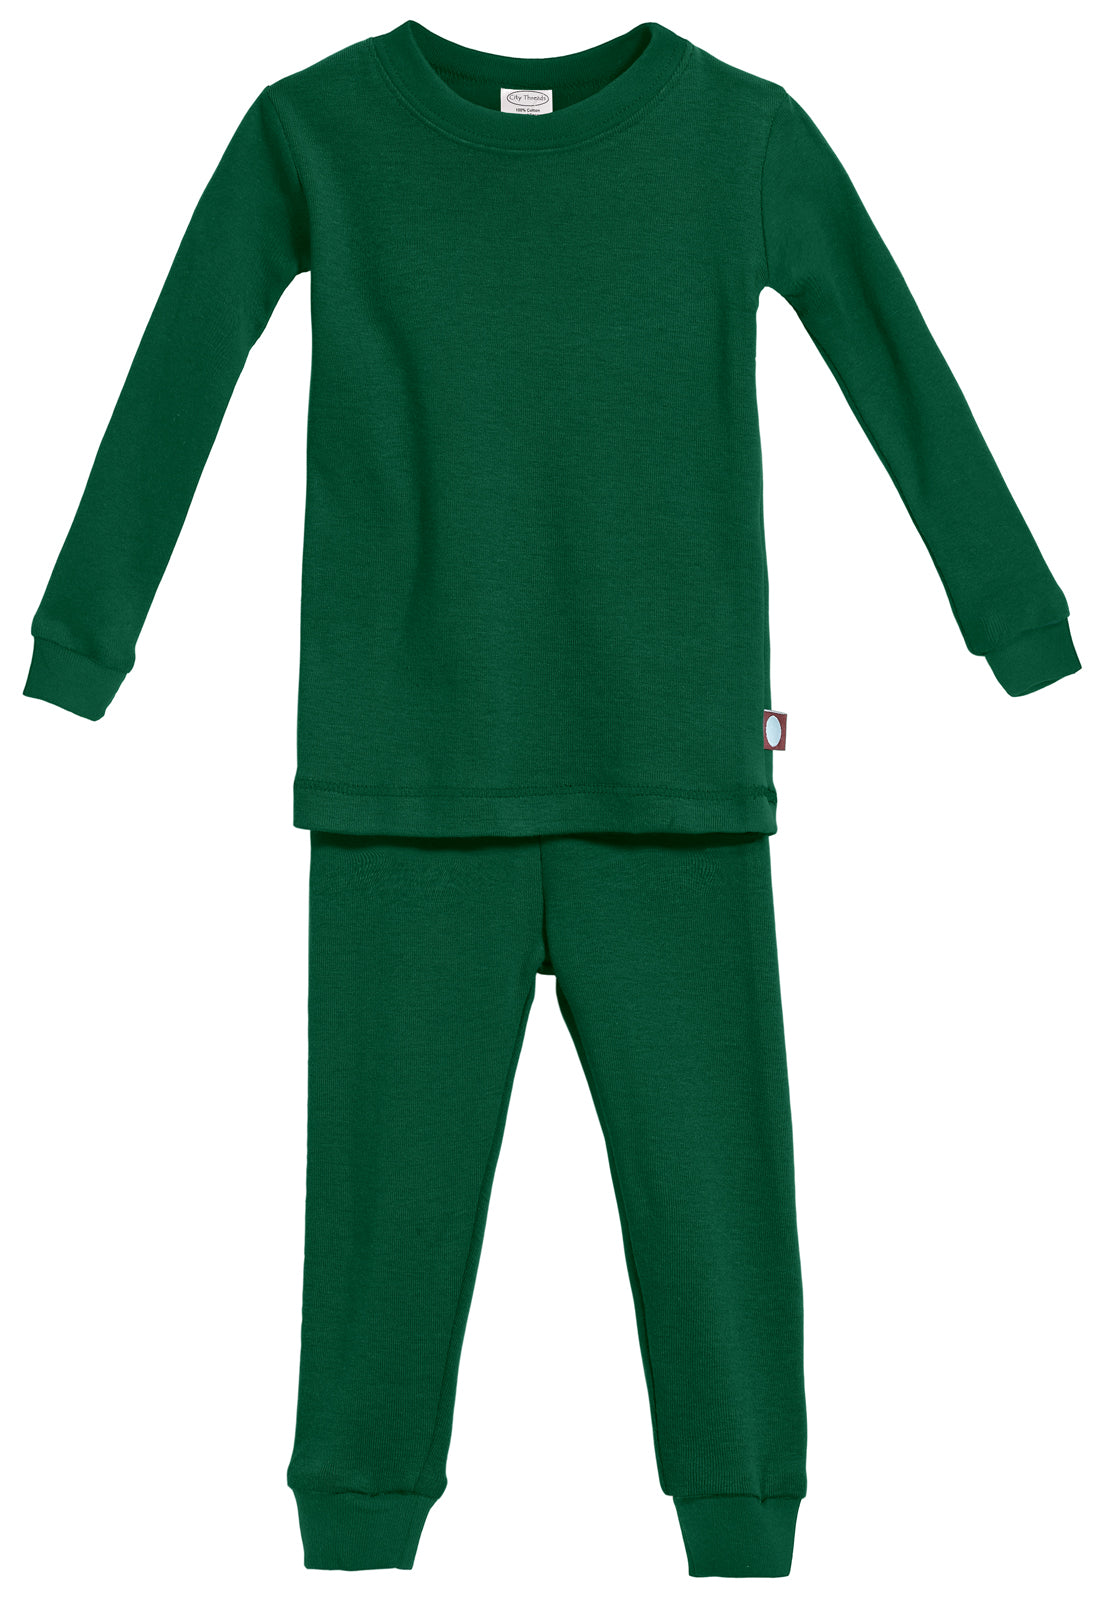 Organic Cotton Pajamas (Top 7 Brands) - Gurl Gone Green